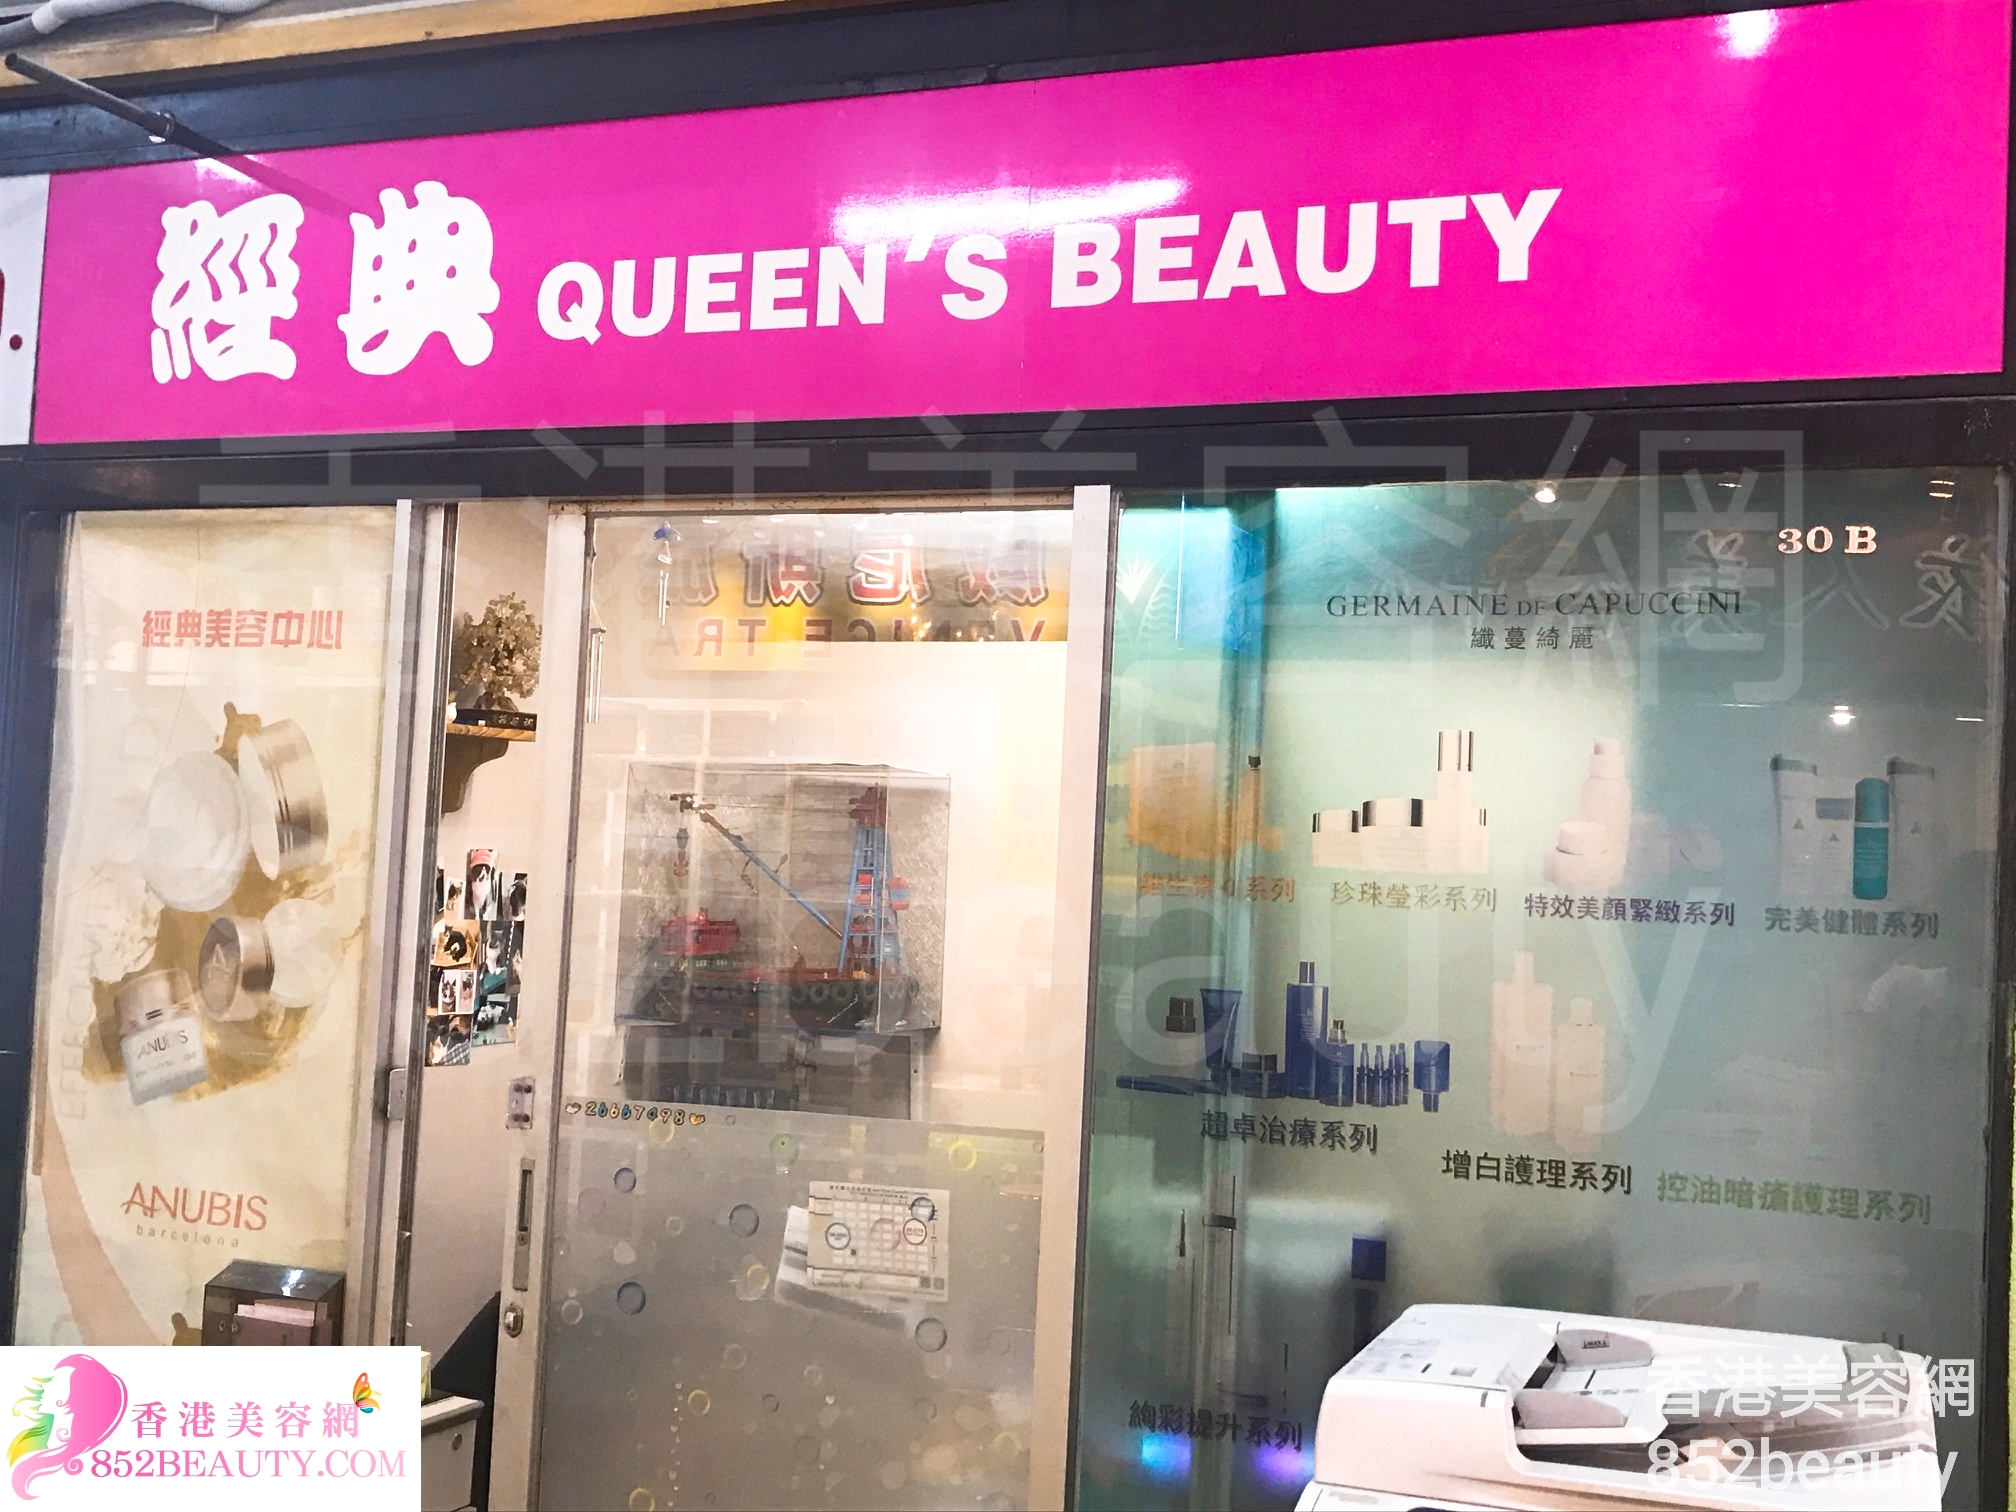 香港美容網 Hong Kong Beauty Salon 美容院 / 美容師: 經典 Queen's Beauty